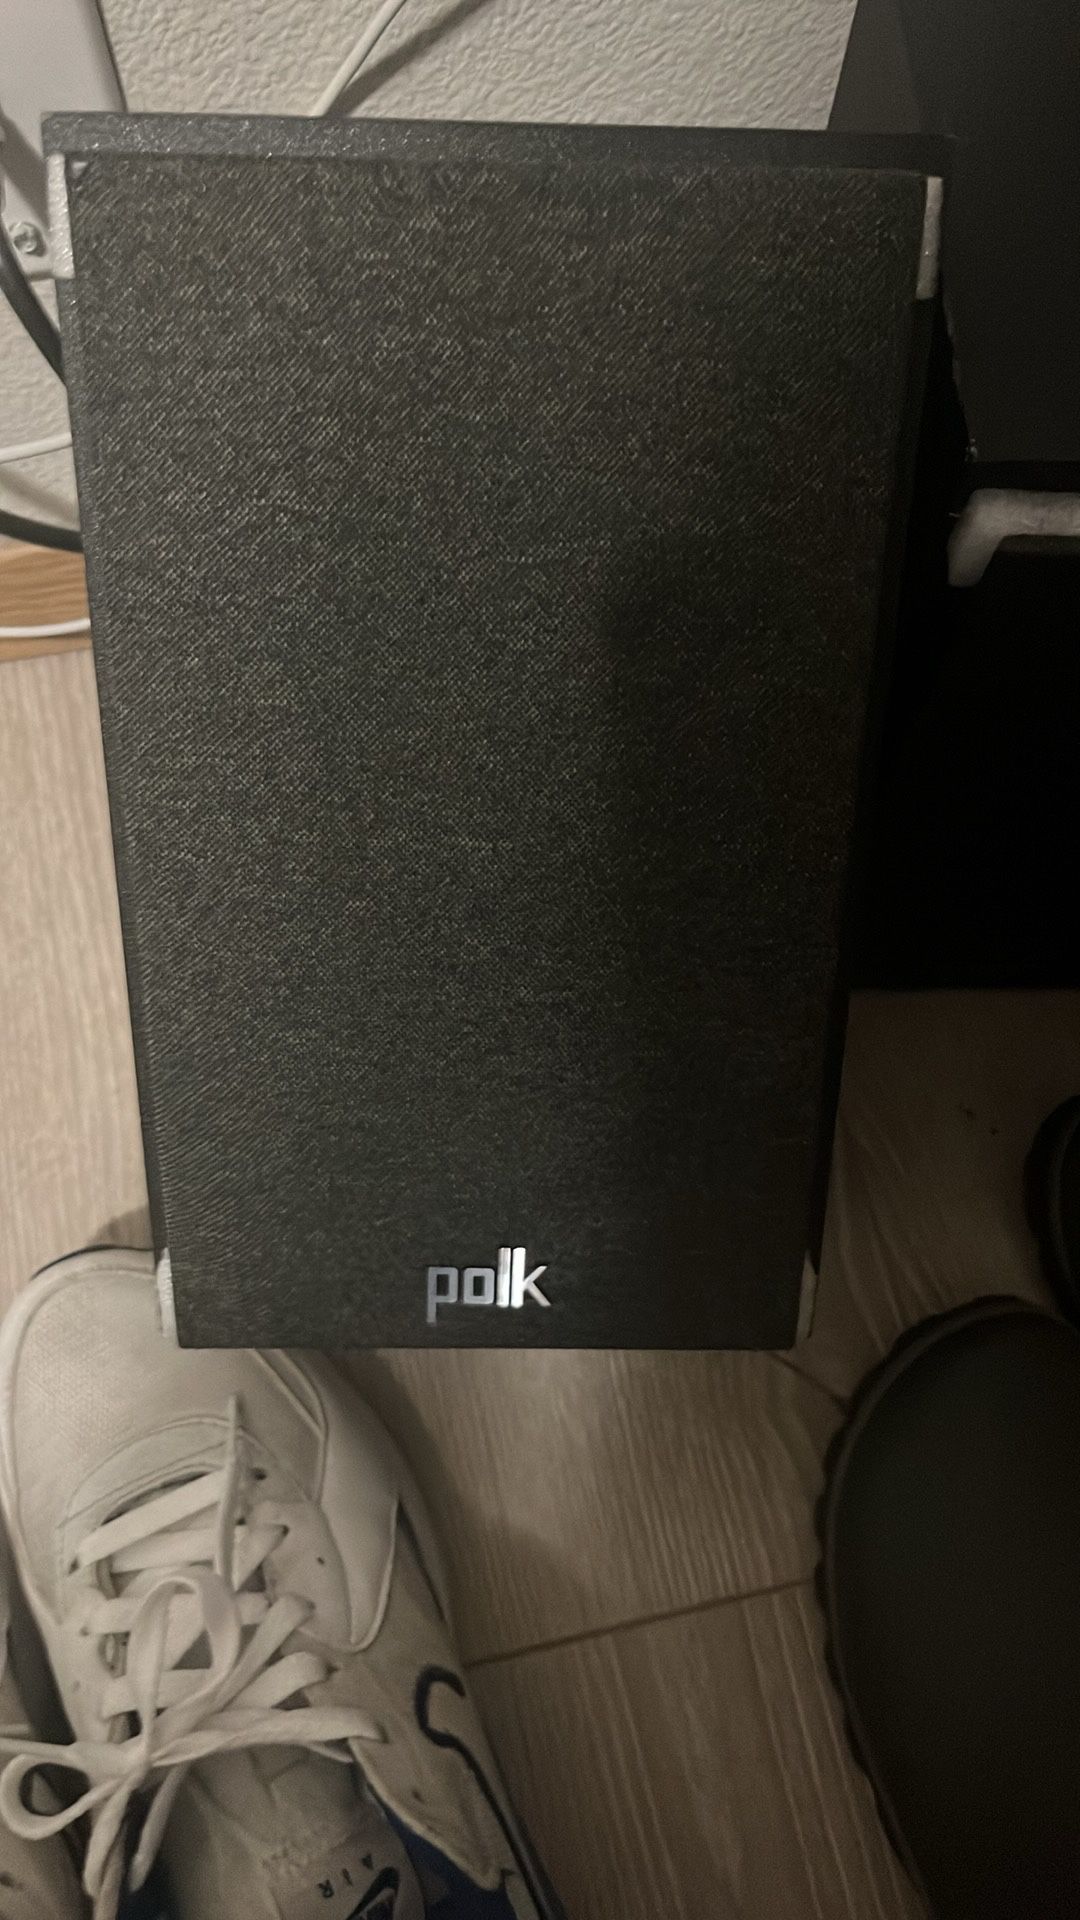 2 Polk Audio Home Speakers Brand New 